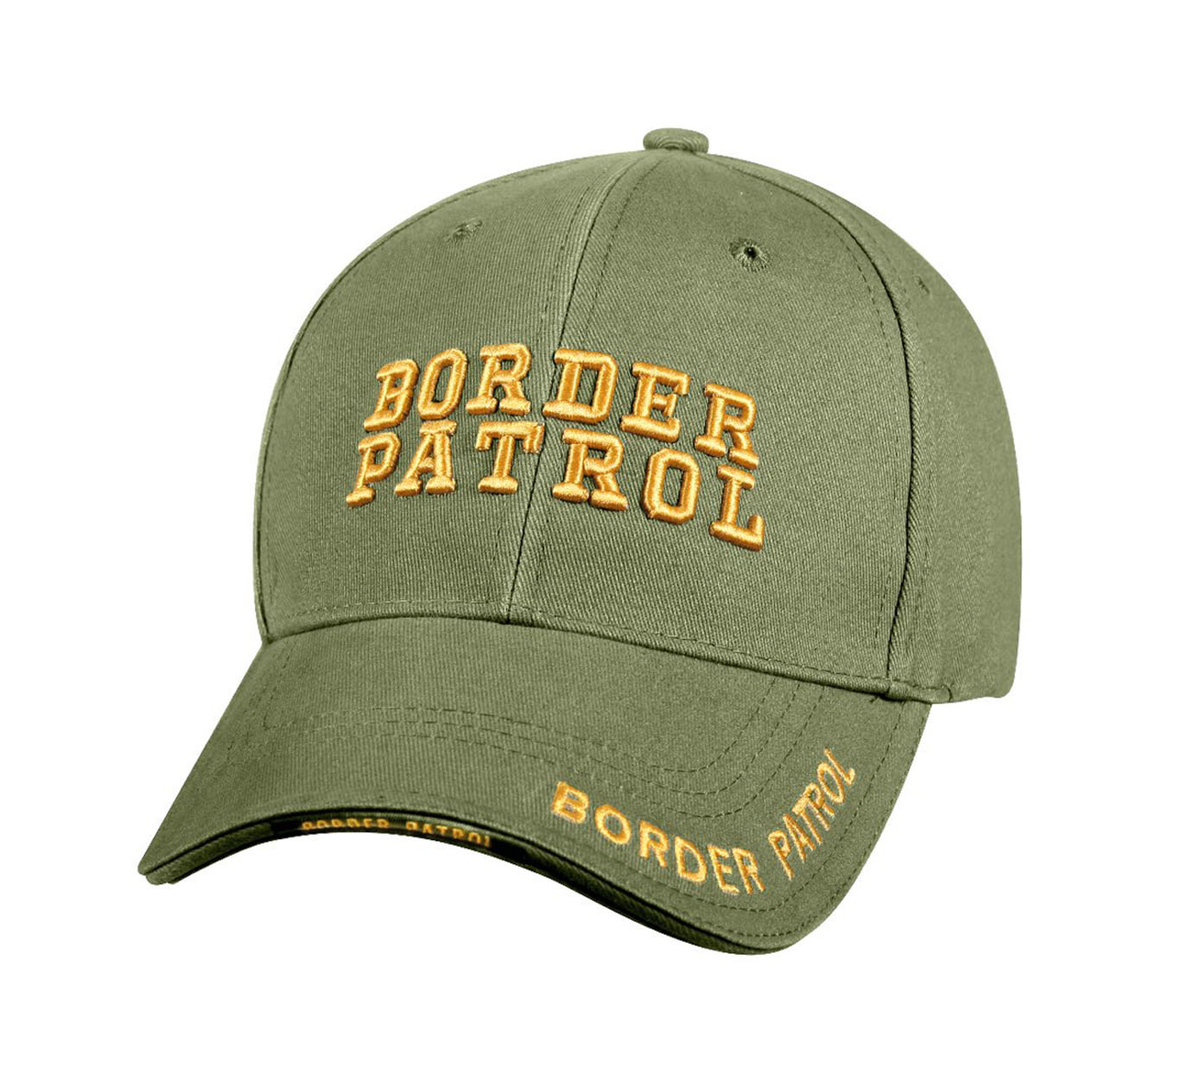 Rothco Deluxe Border Patrol Low Profile Cap